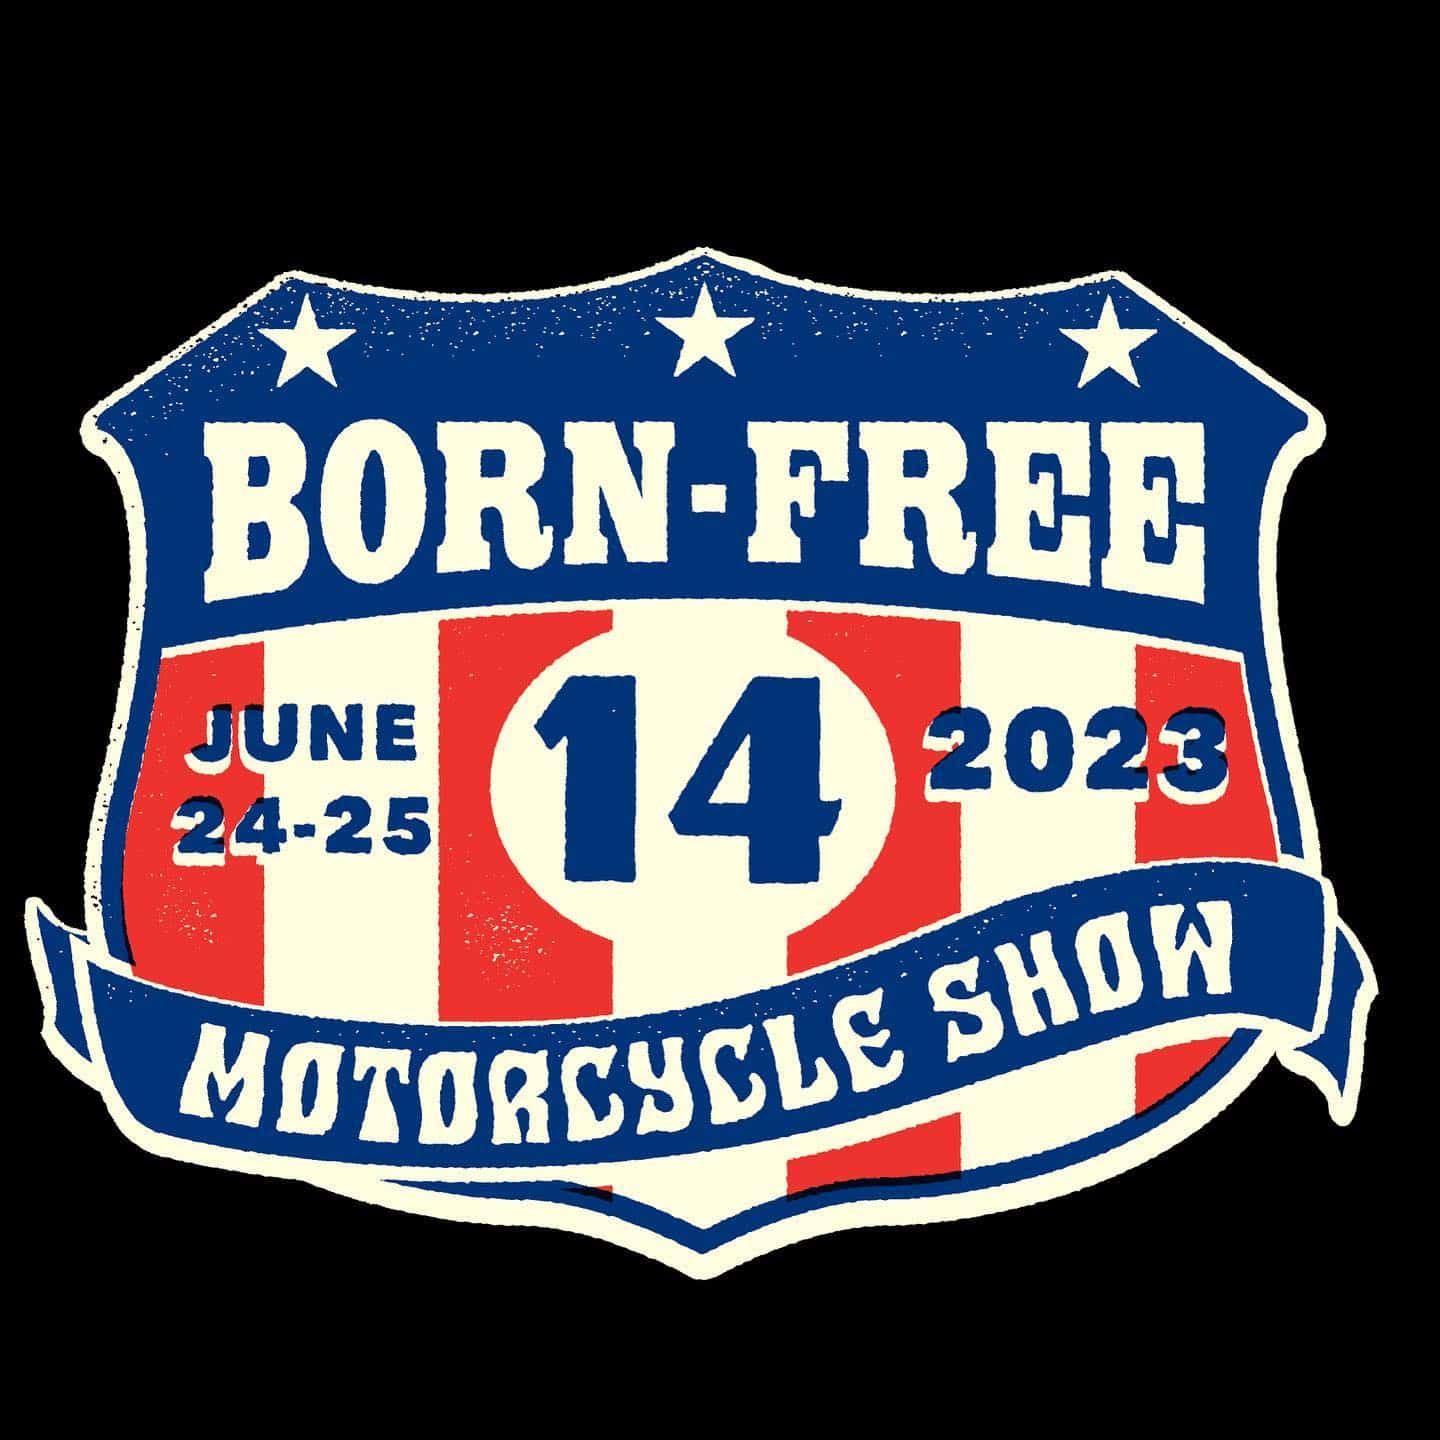 California Motorcycle Events Biker Rally Calendar for 2023